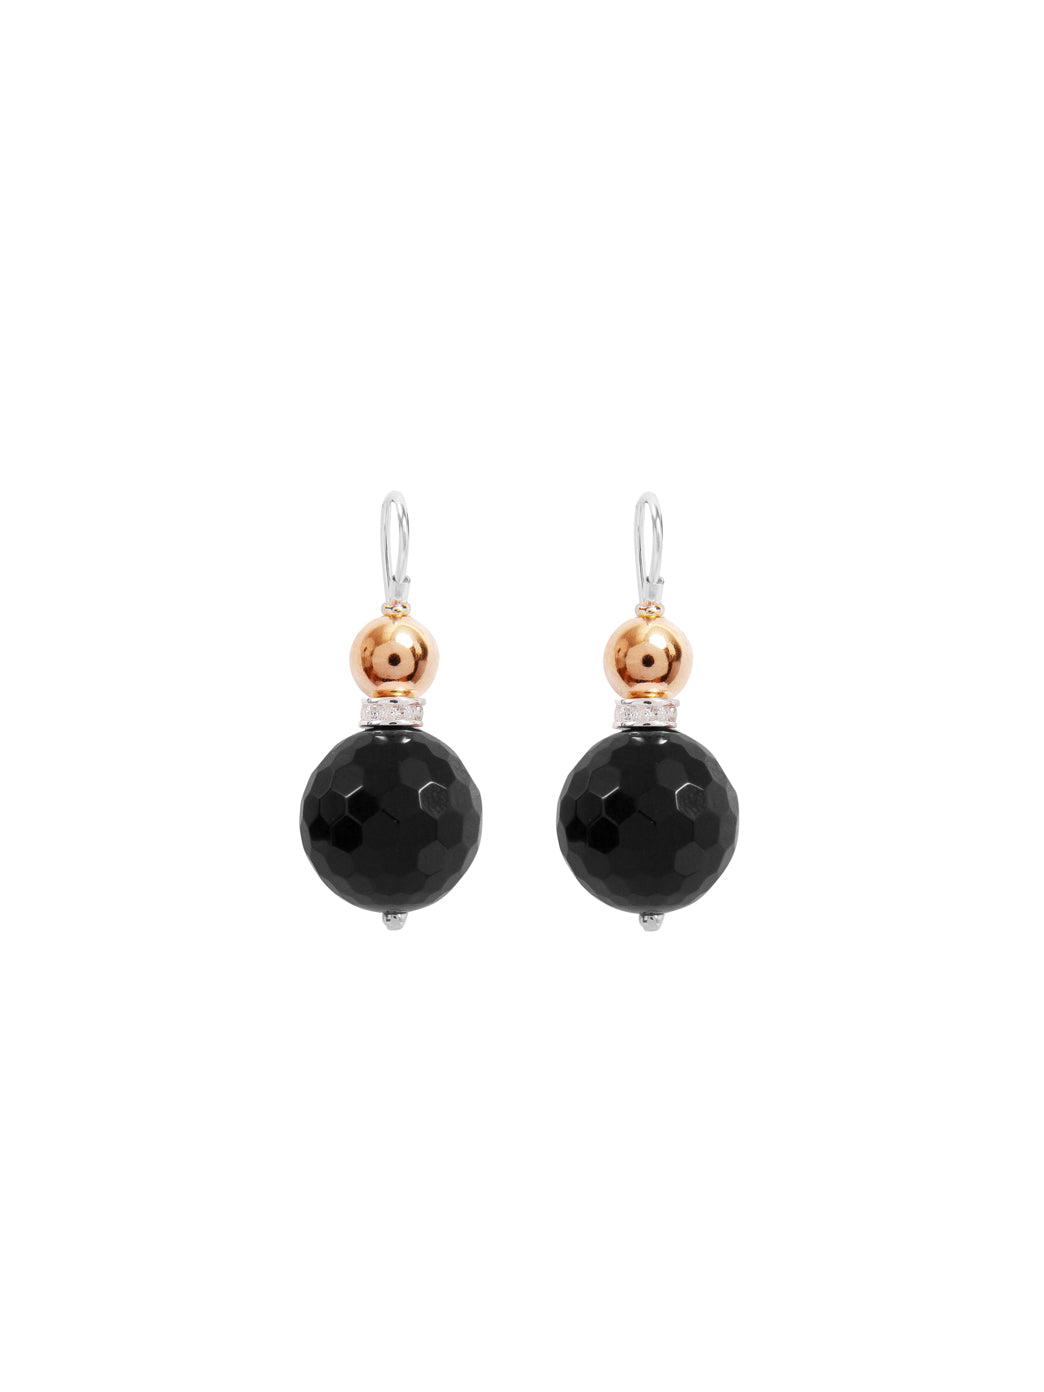 Fiorina Jewellery Double Ball Earrings Black Onyx